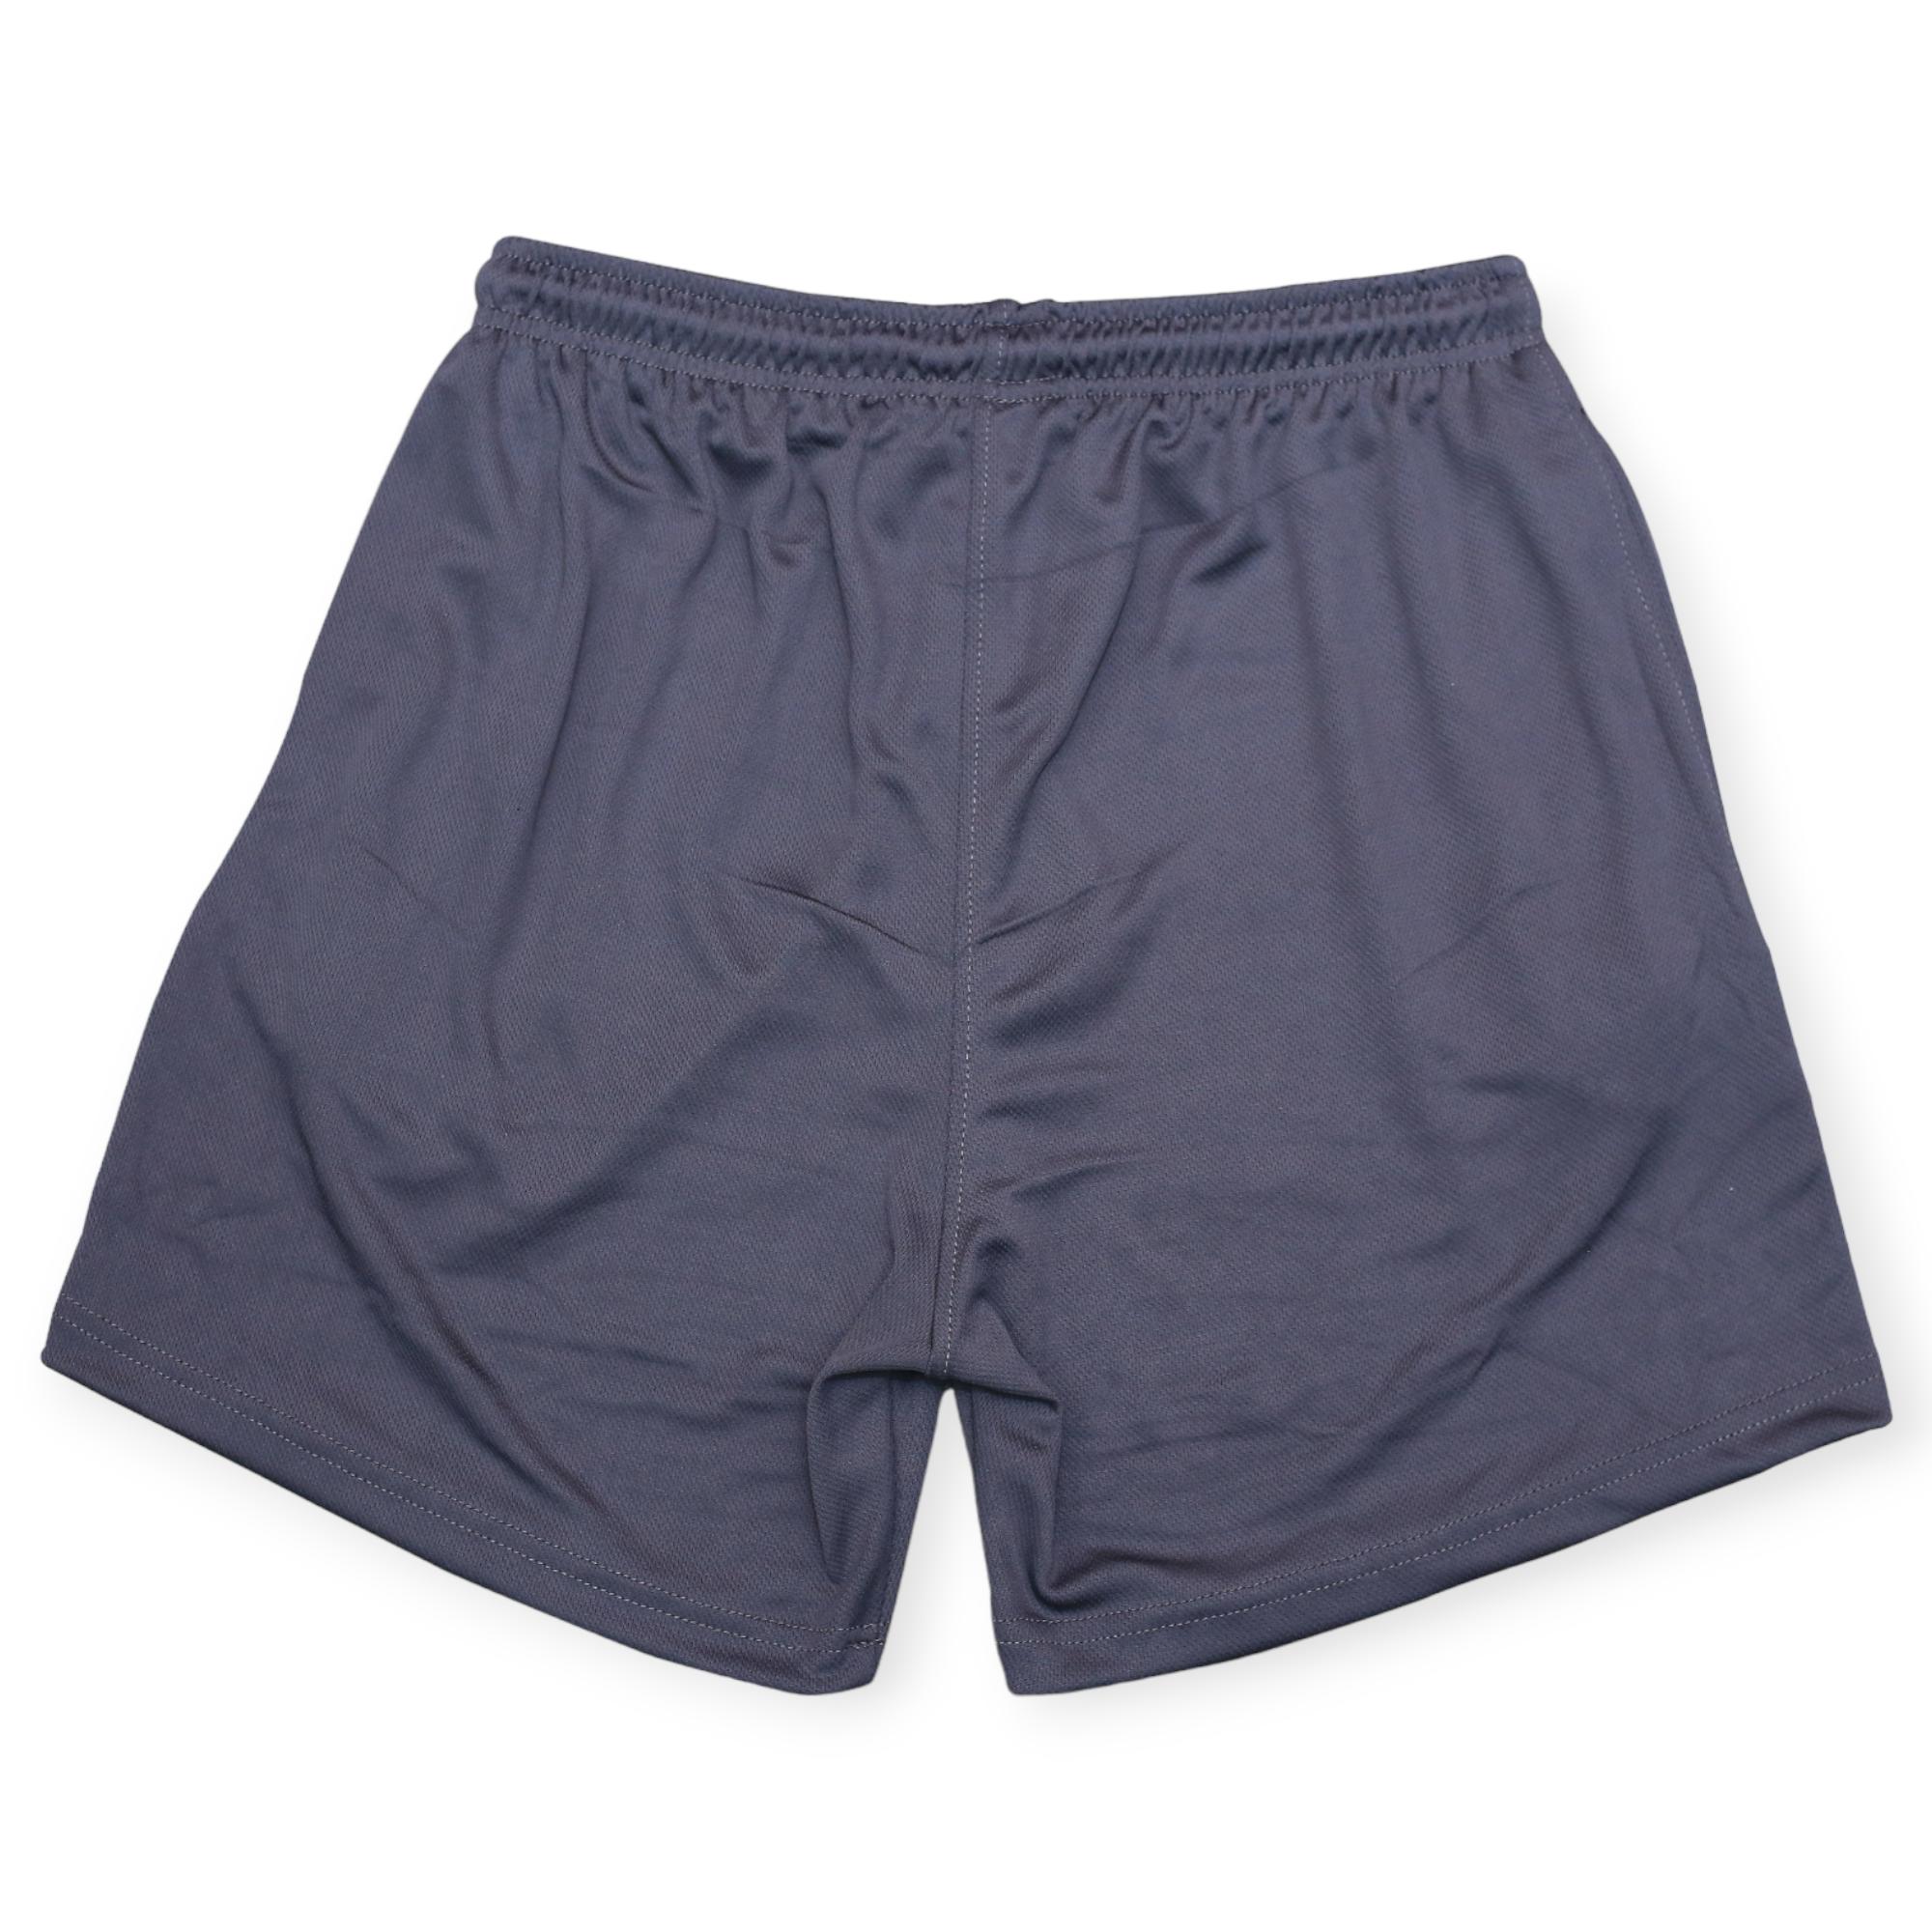 Nexus Clothing Men Basic Solid Mesh Breathable Mesh Shorts (Charcoal)